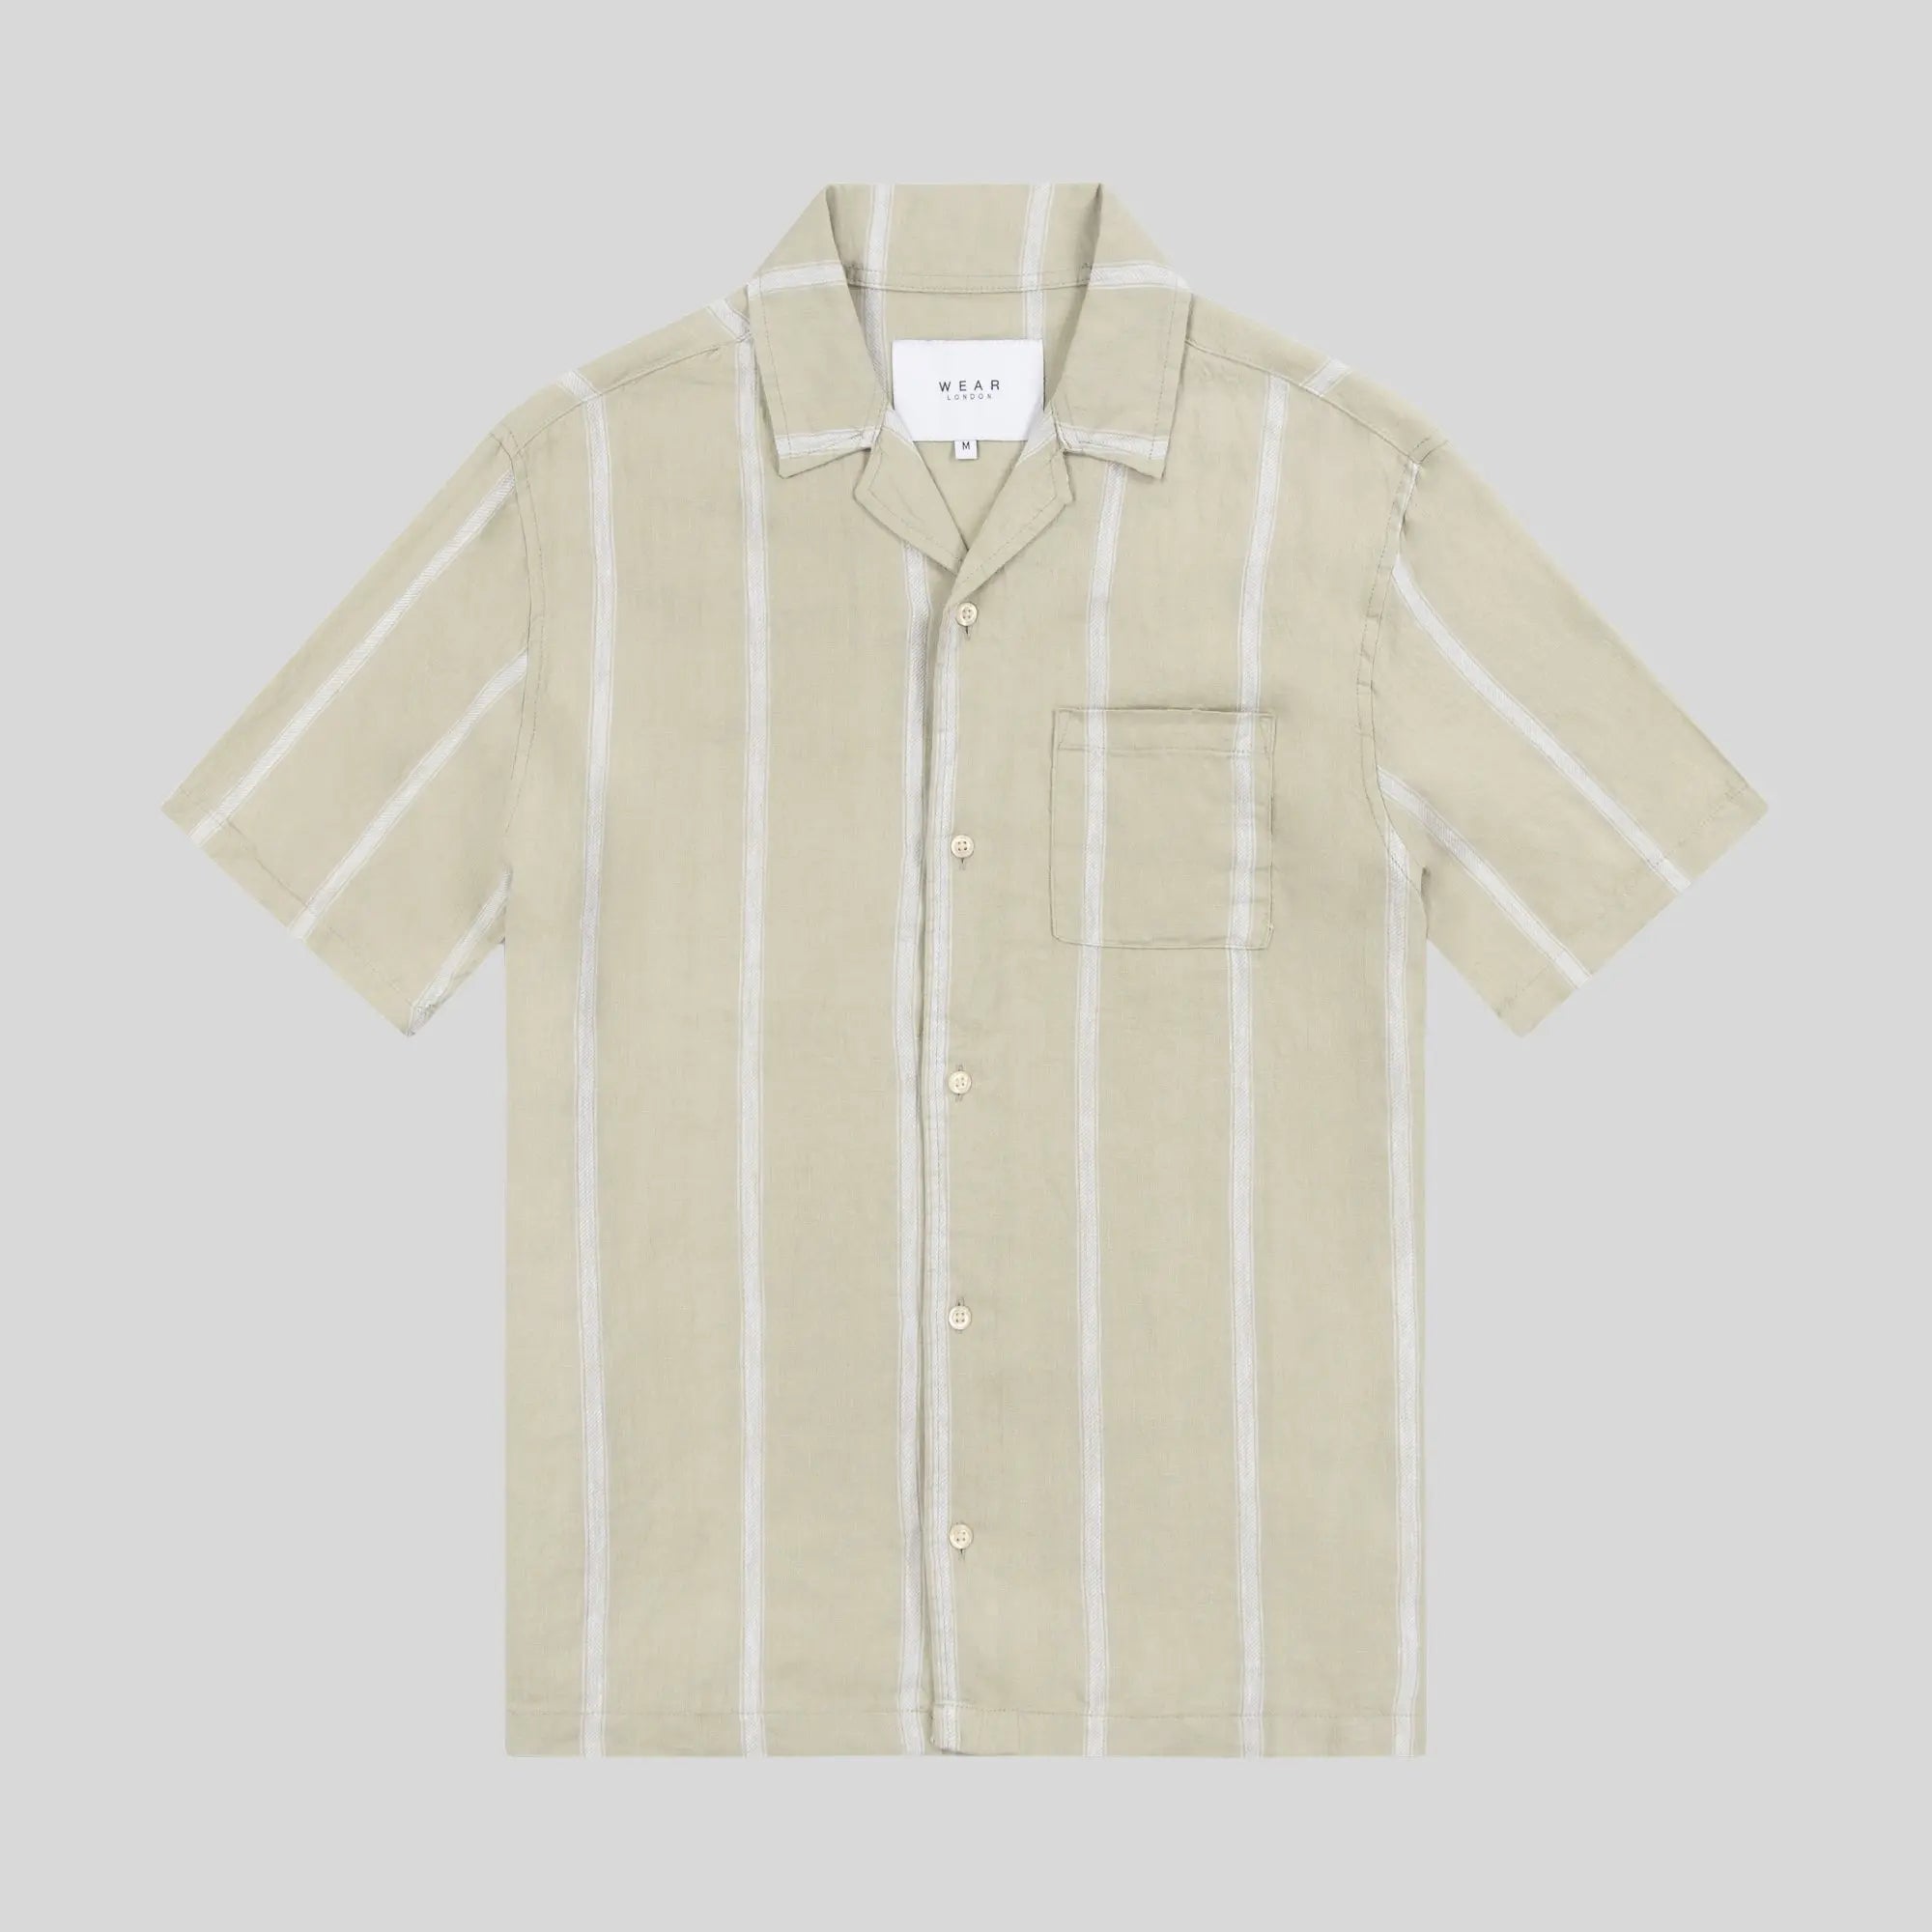 Ashton - Linen Short Sleeve Shirt - Khaki White - Wear London